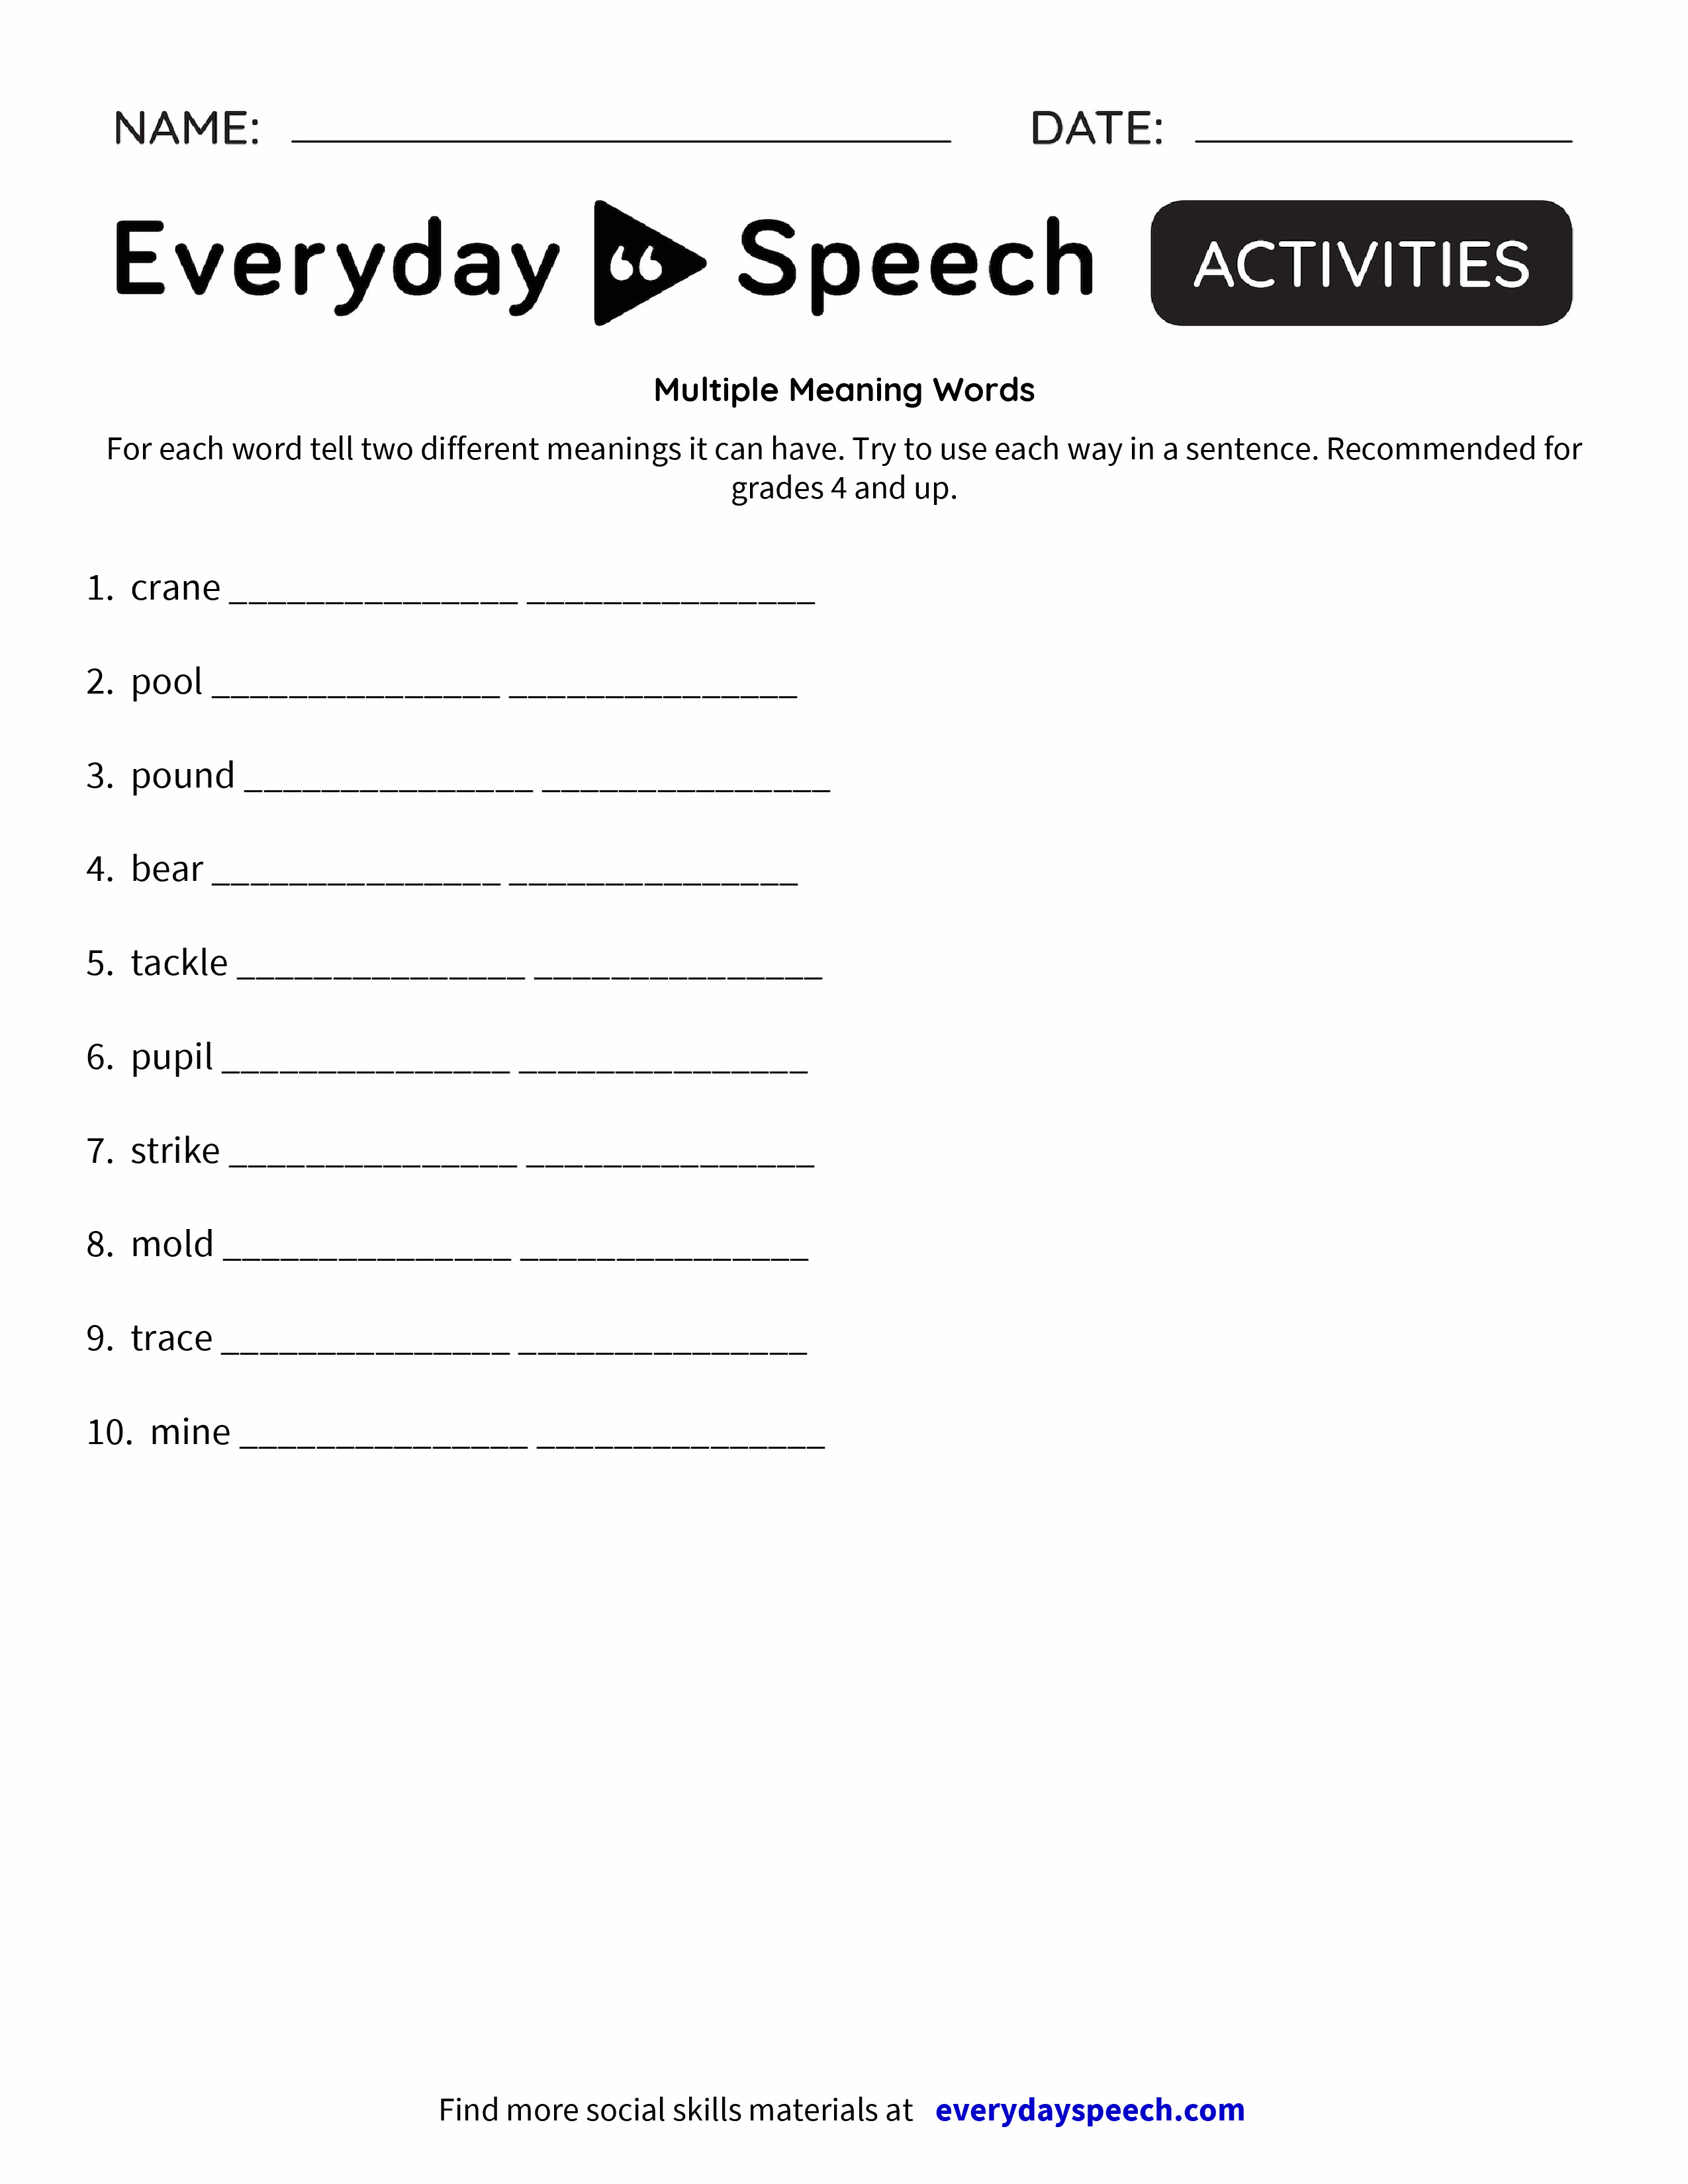 multiple-meaning-words-everyday-speech-everyday-speech